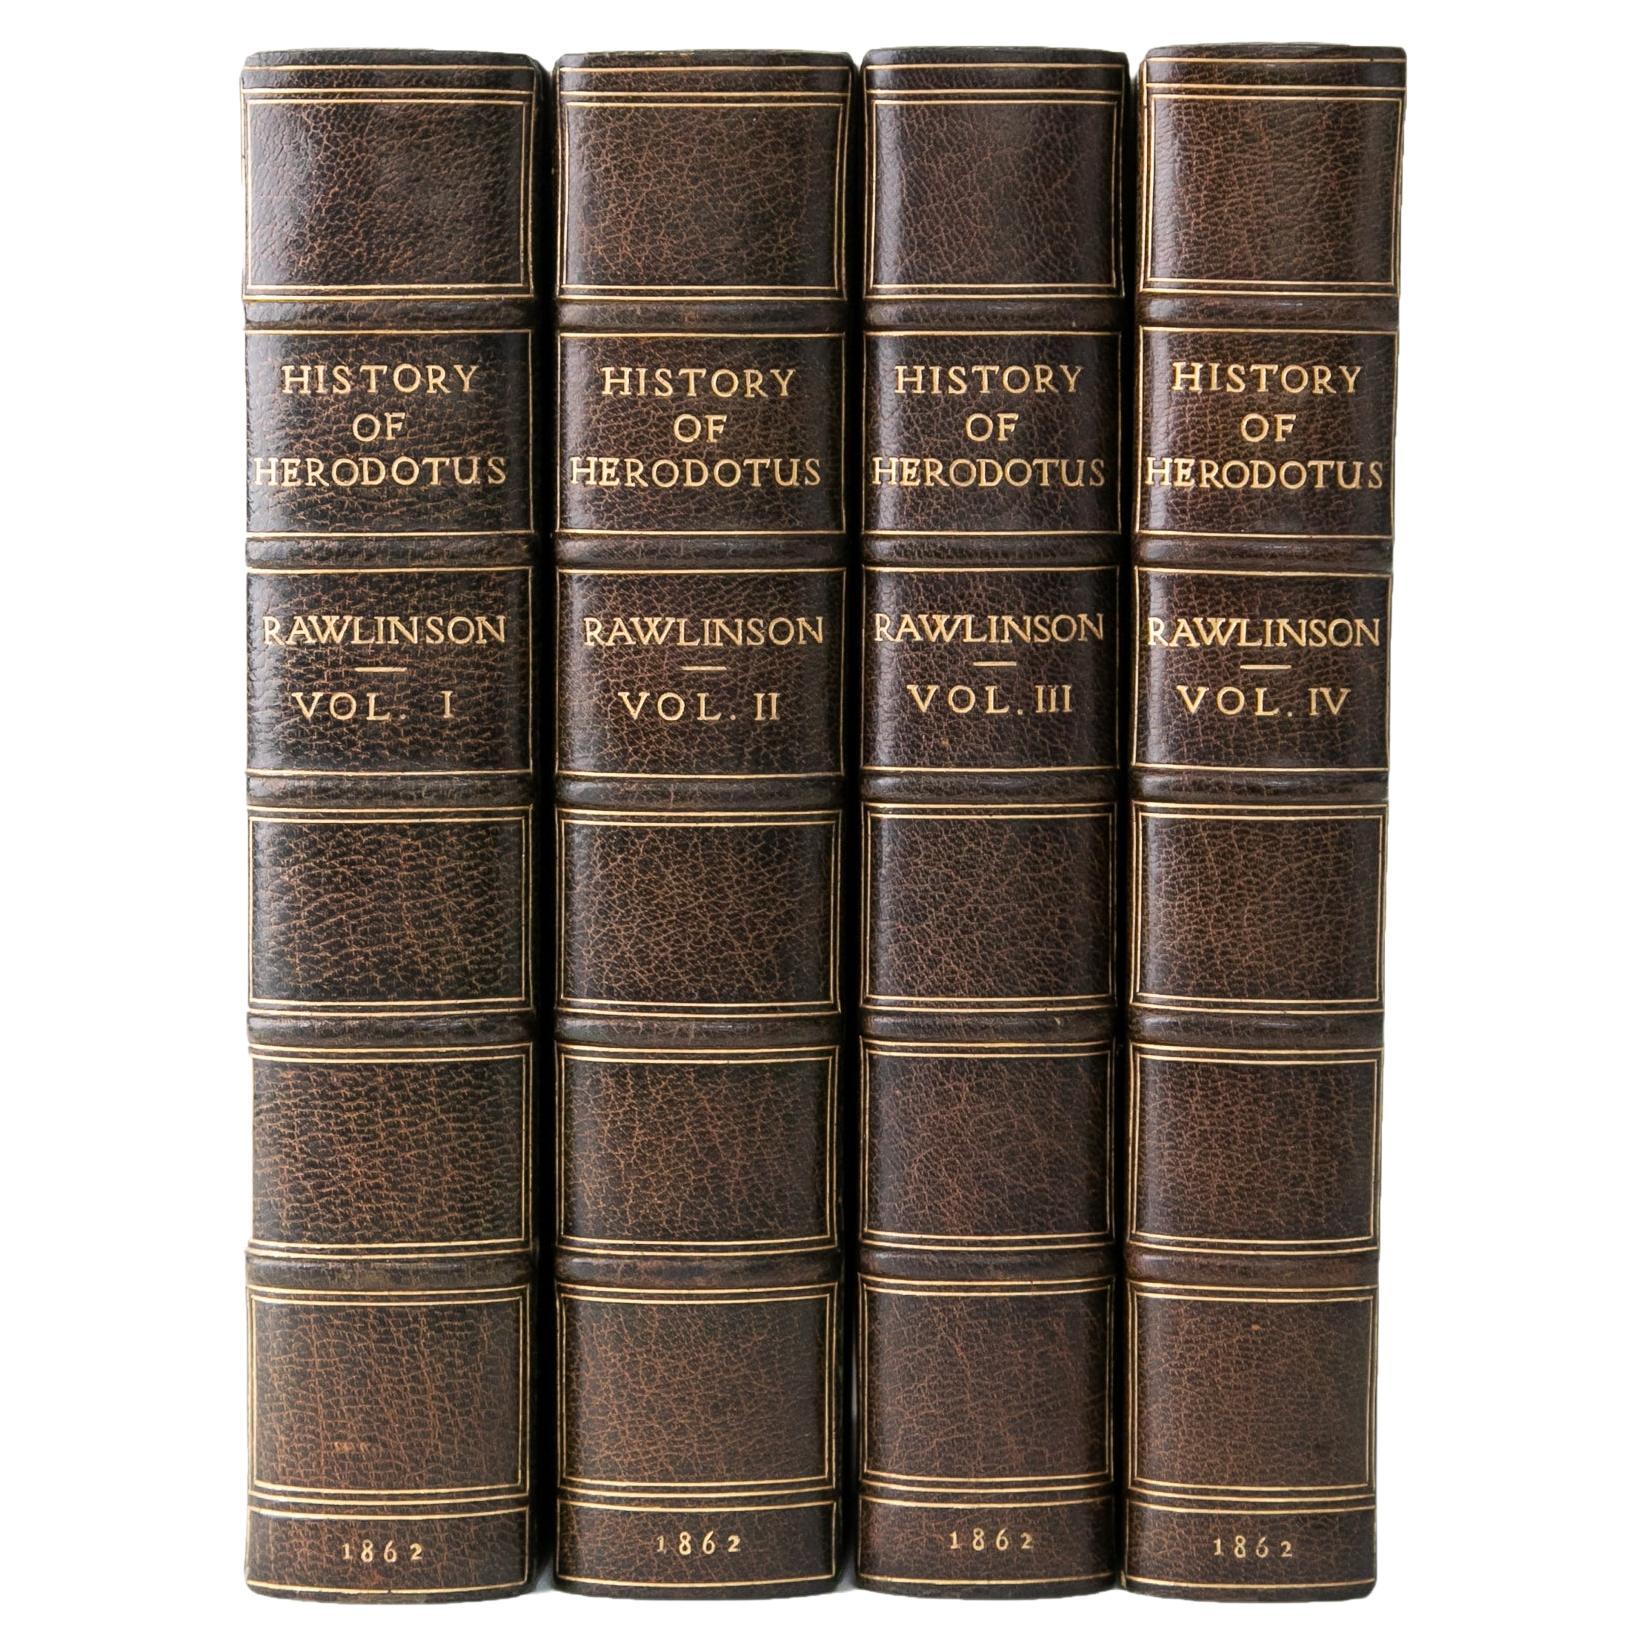 4 Volumes, George Rawlinson, History of Herodotus